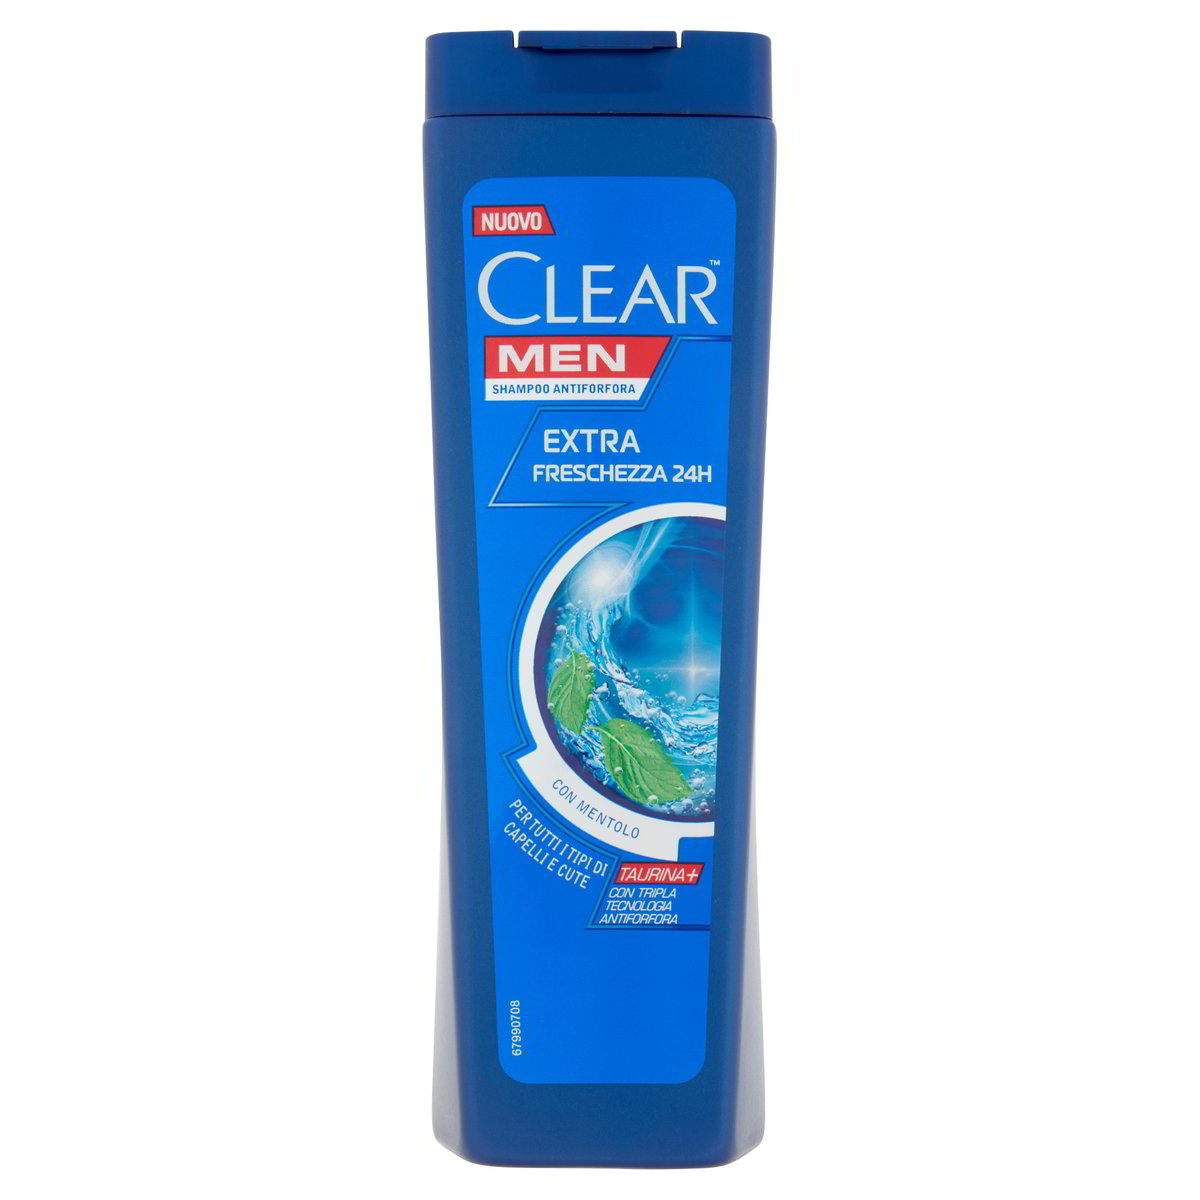 Clear Shampoo Men Antiforfora Ice Fresh